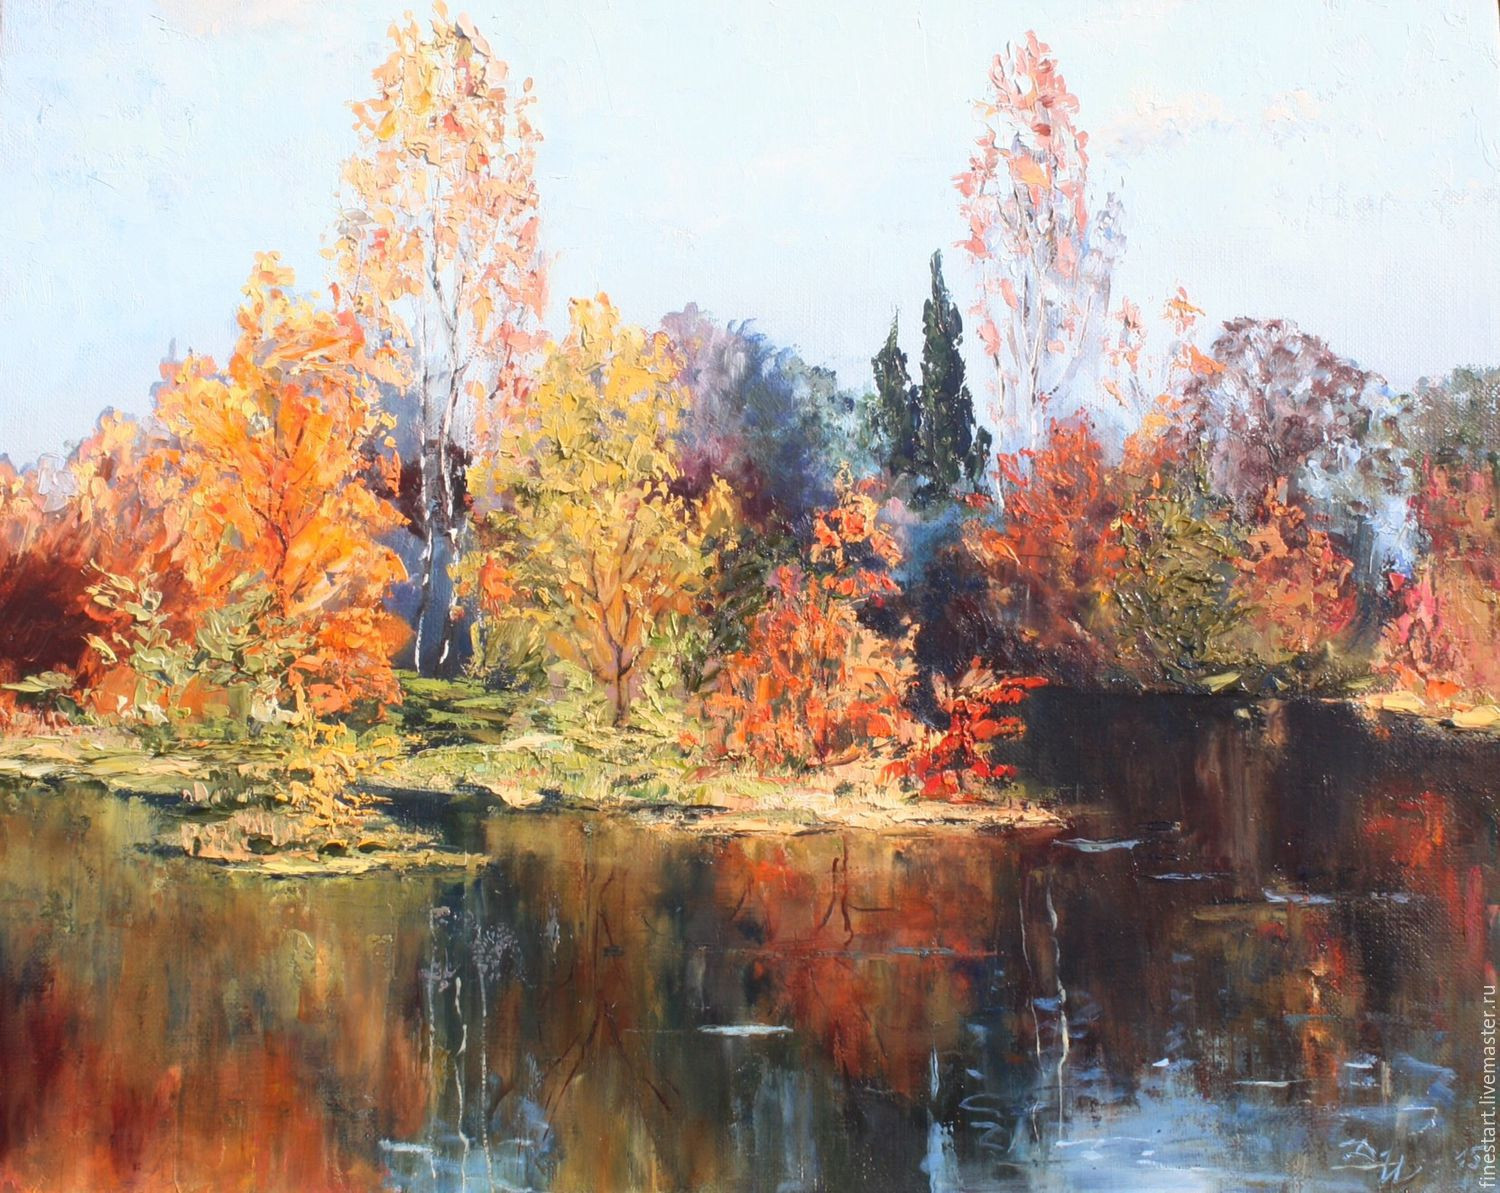 Landscape Paintings On Canvas
 Oil painting landscape Autumn Oil on Canvas Impressionism